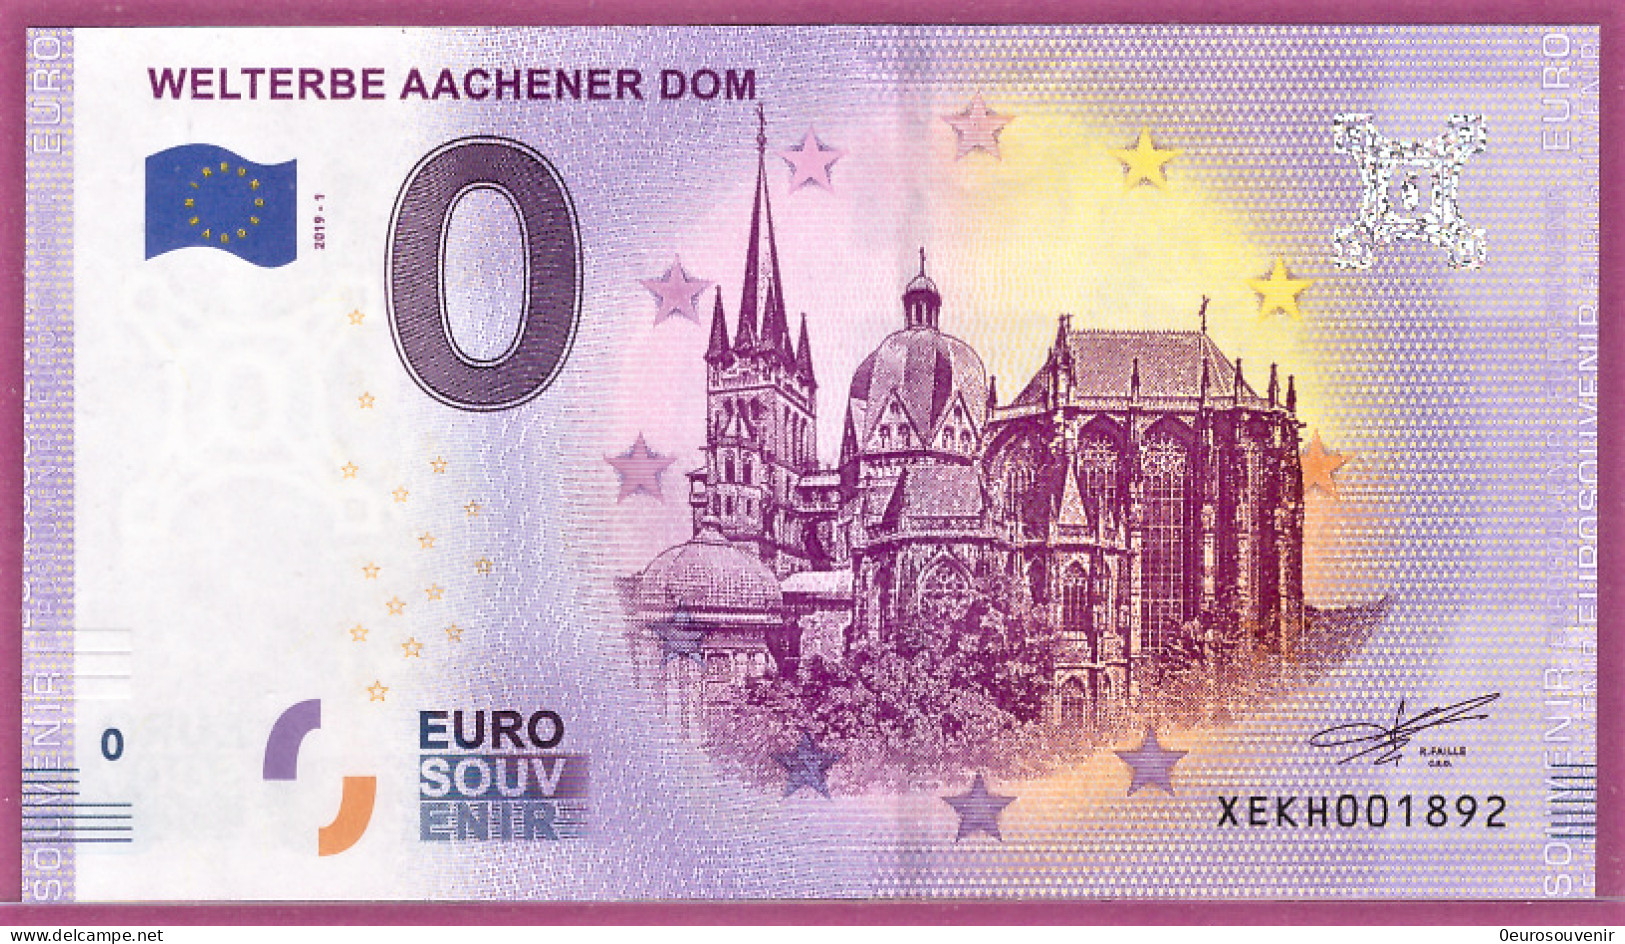 0-Euro XEKH 2019-1 WELTERBE AACHENER DOM - Privatentwürfe